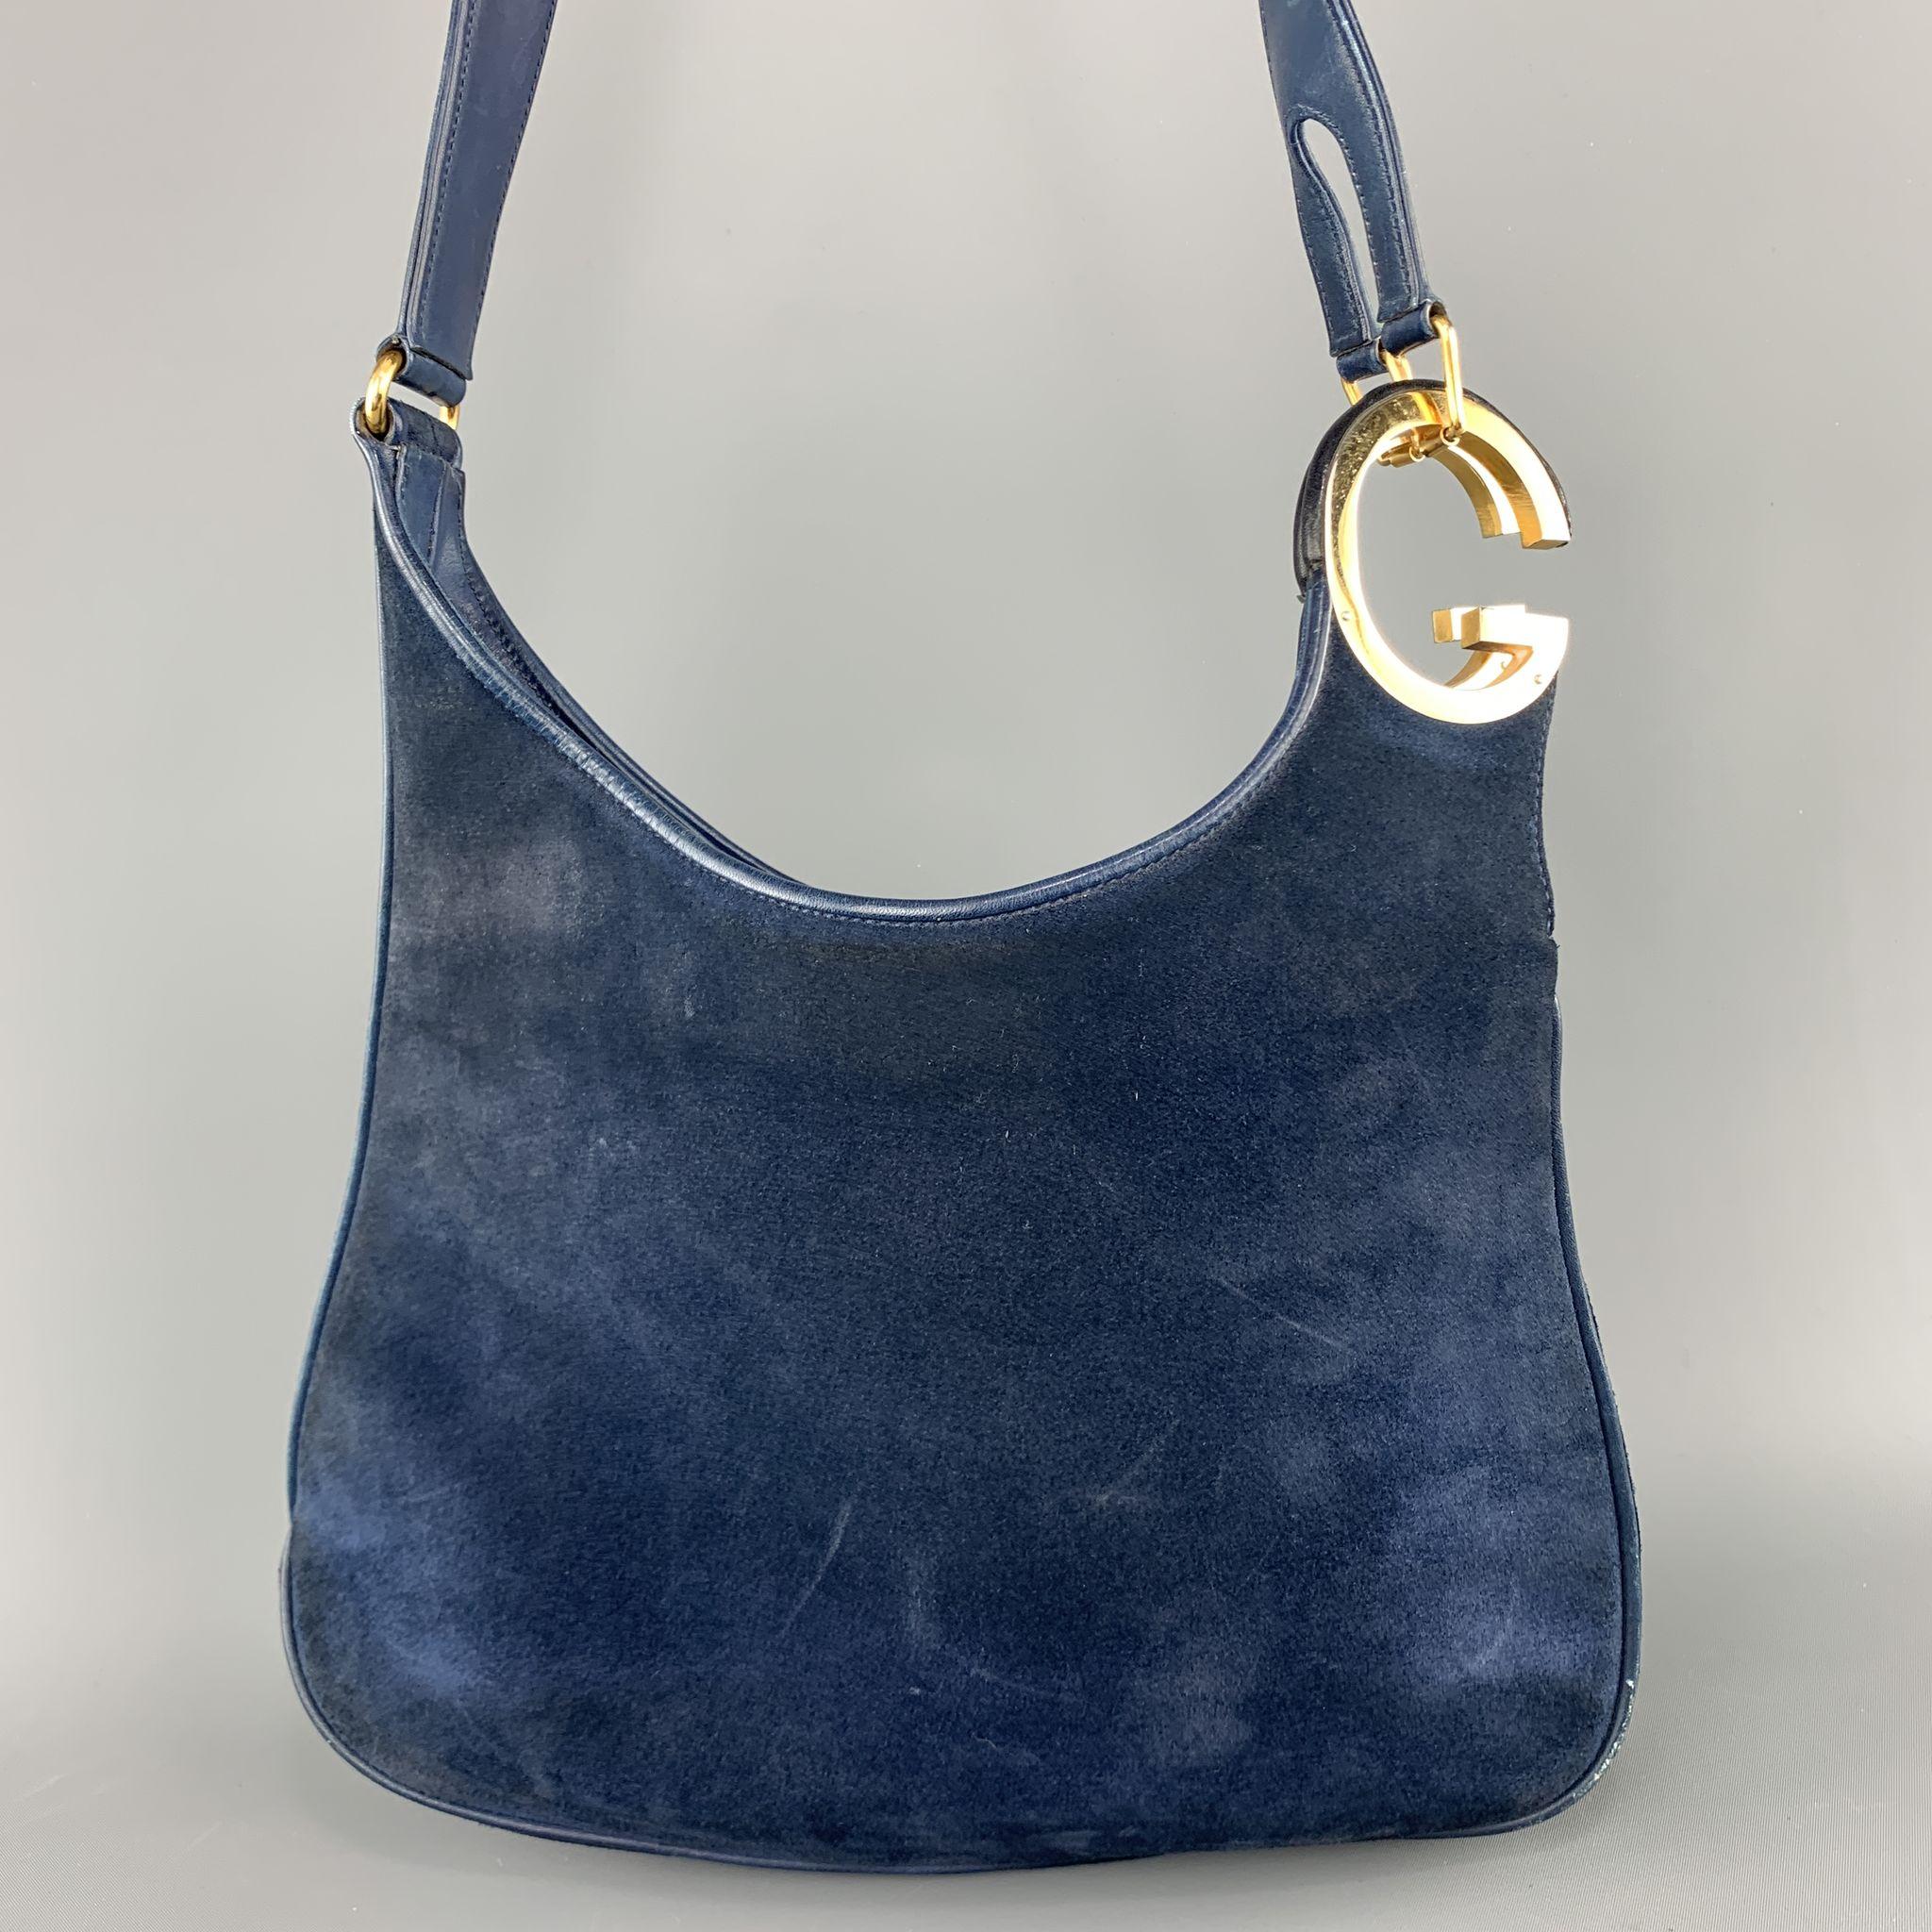 gucci blue suede bag